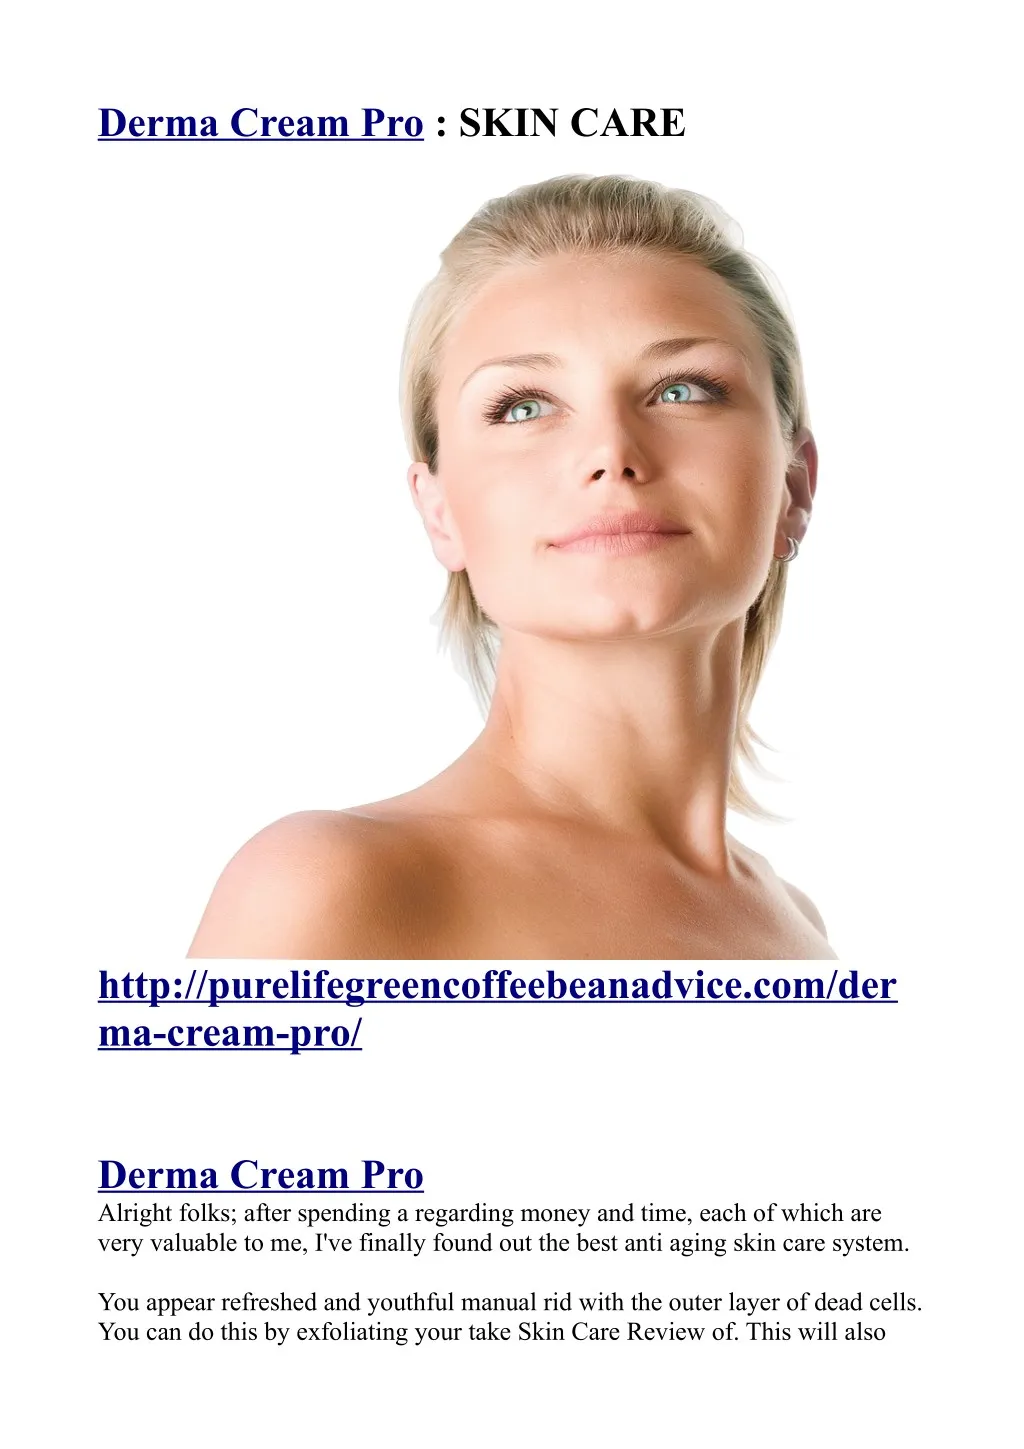 derma cream pro skin care